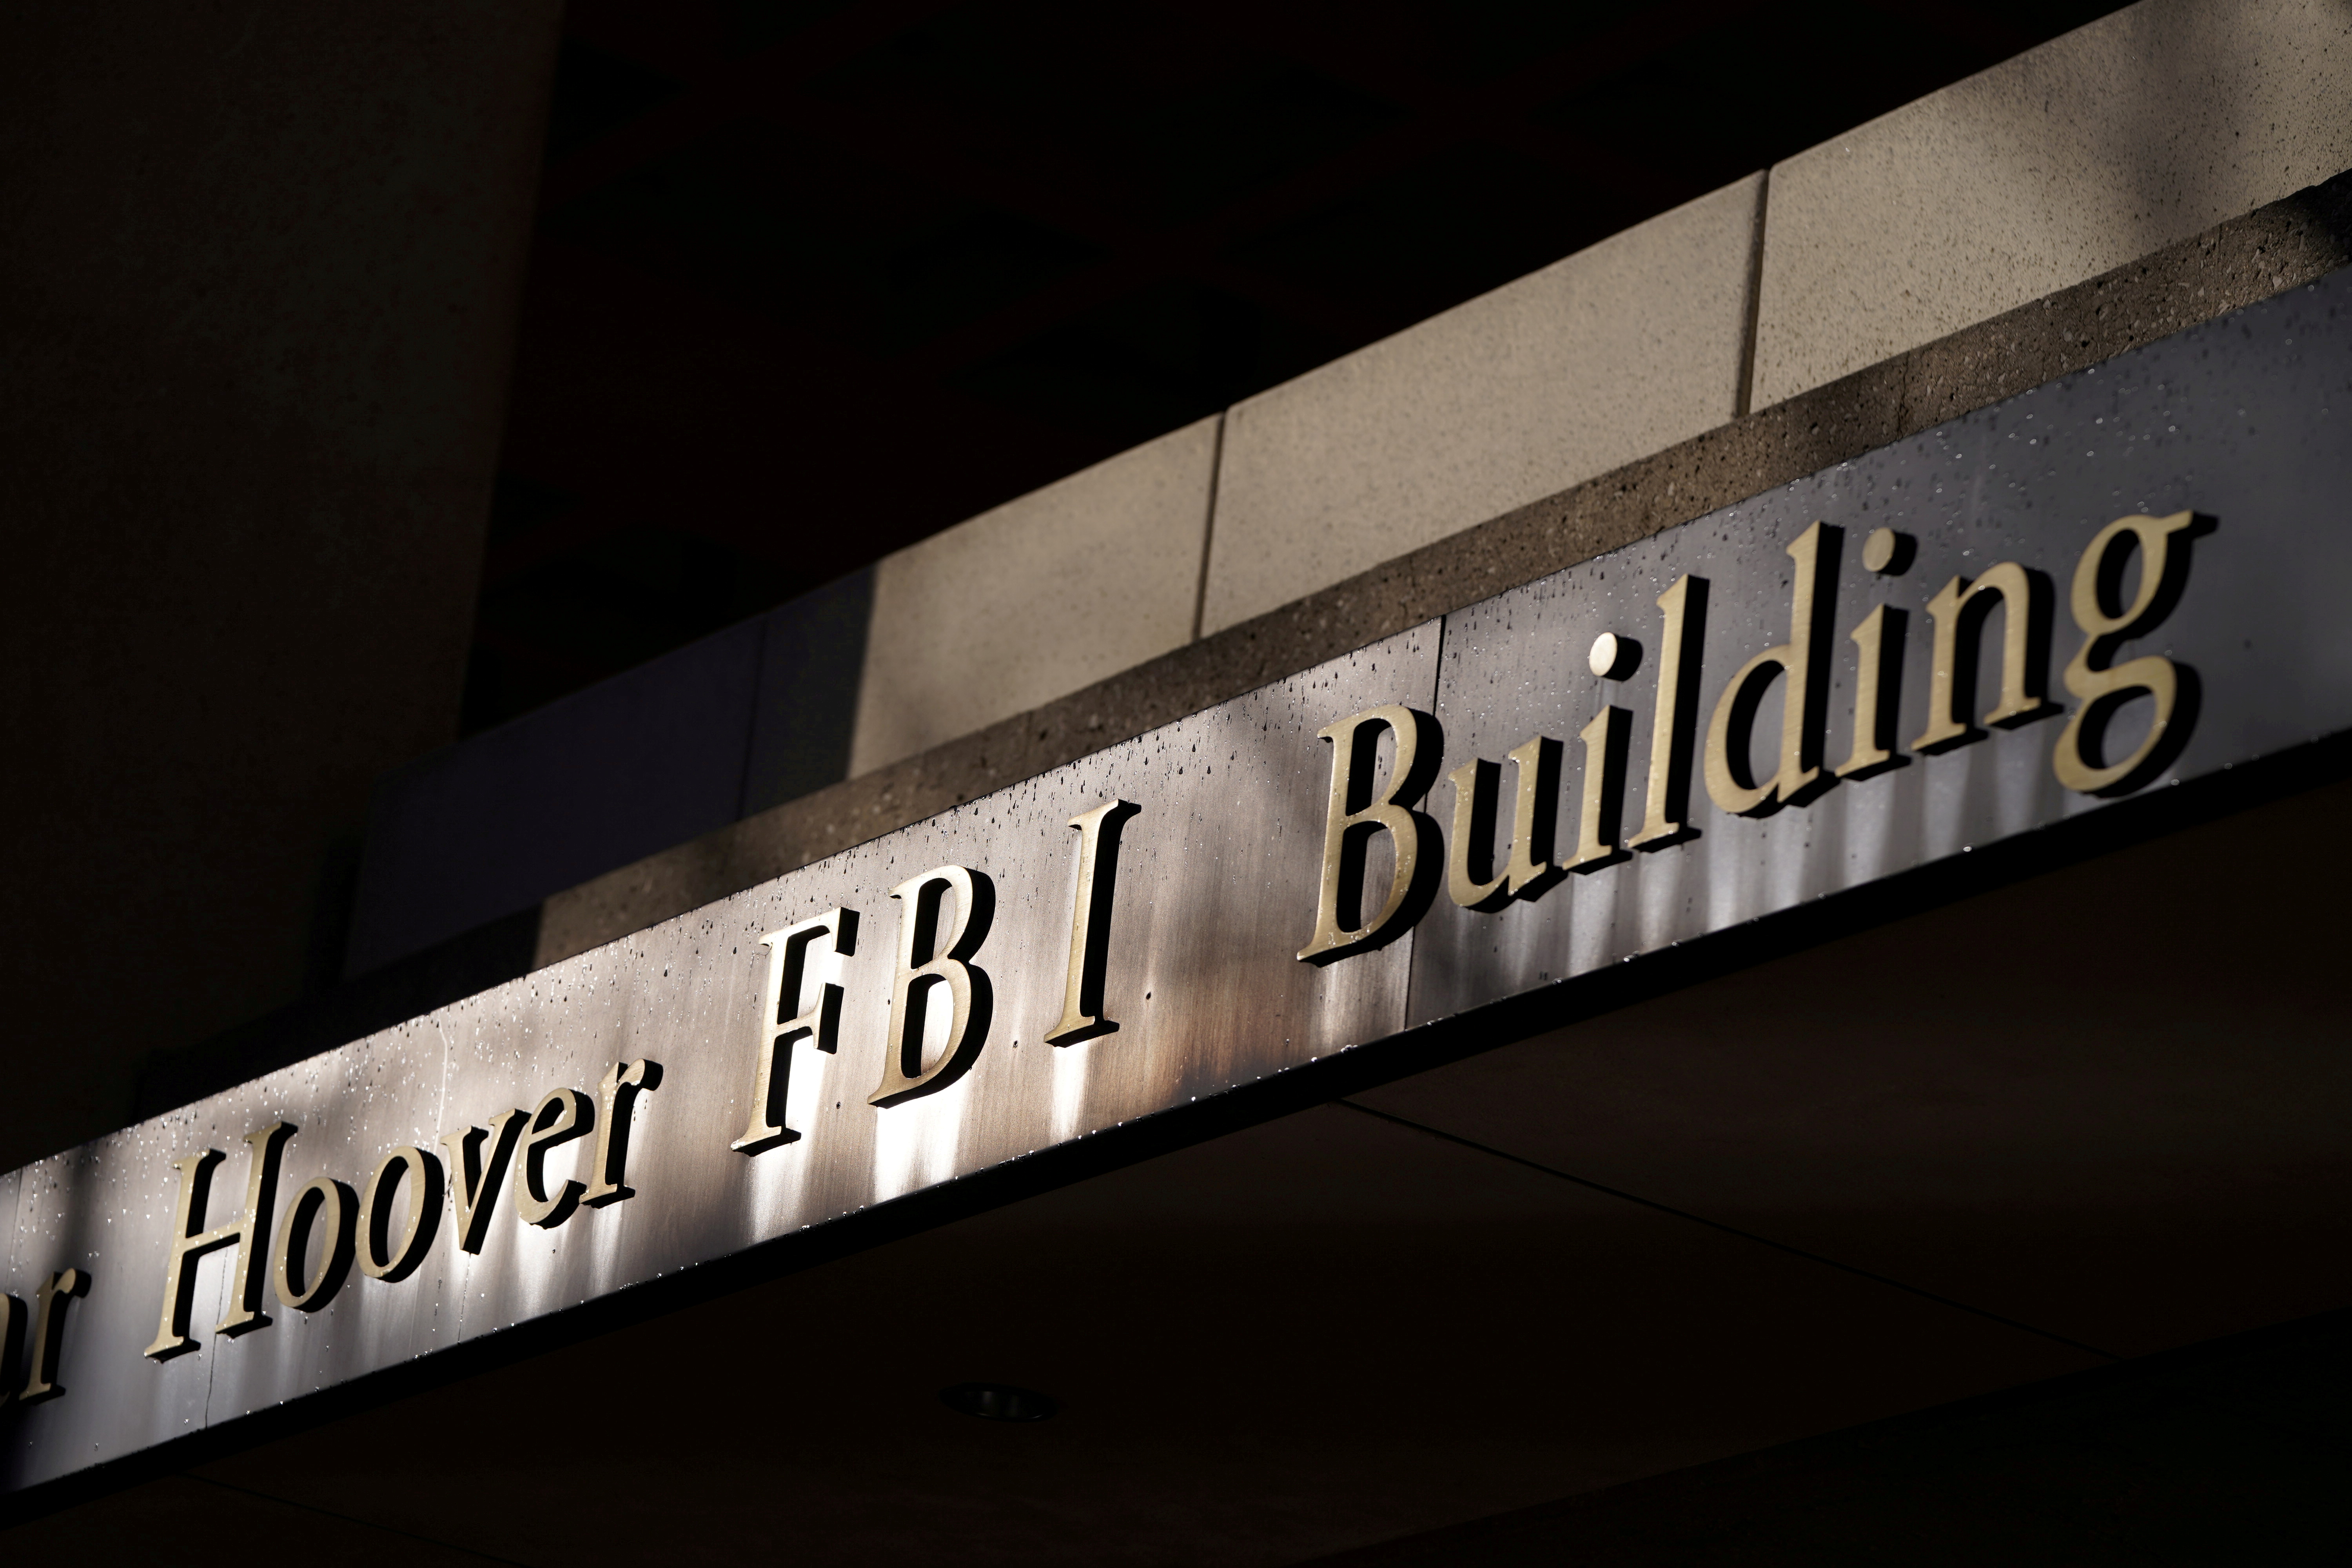 The FBI building is seen in Washington